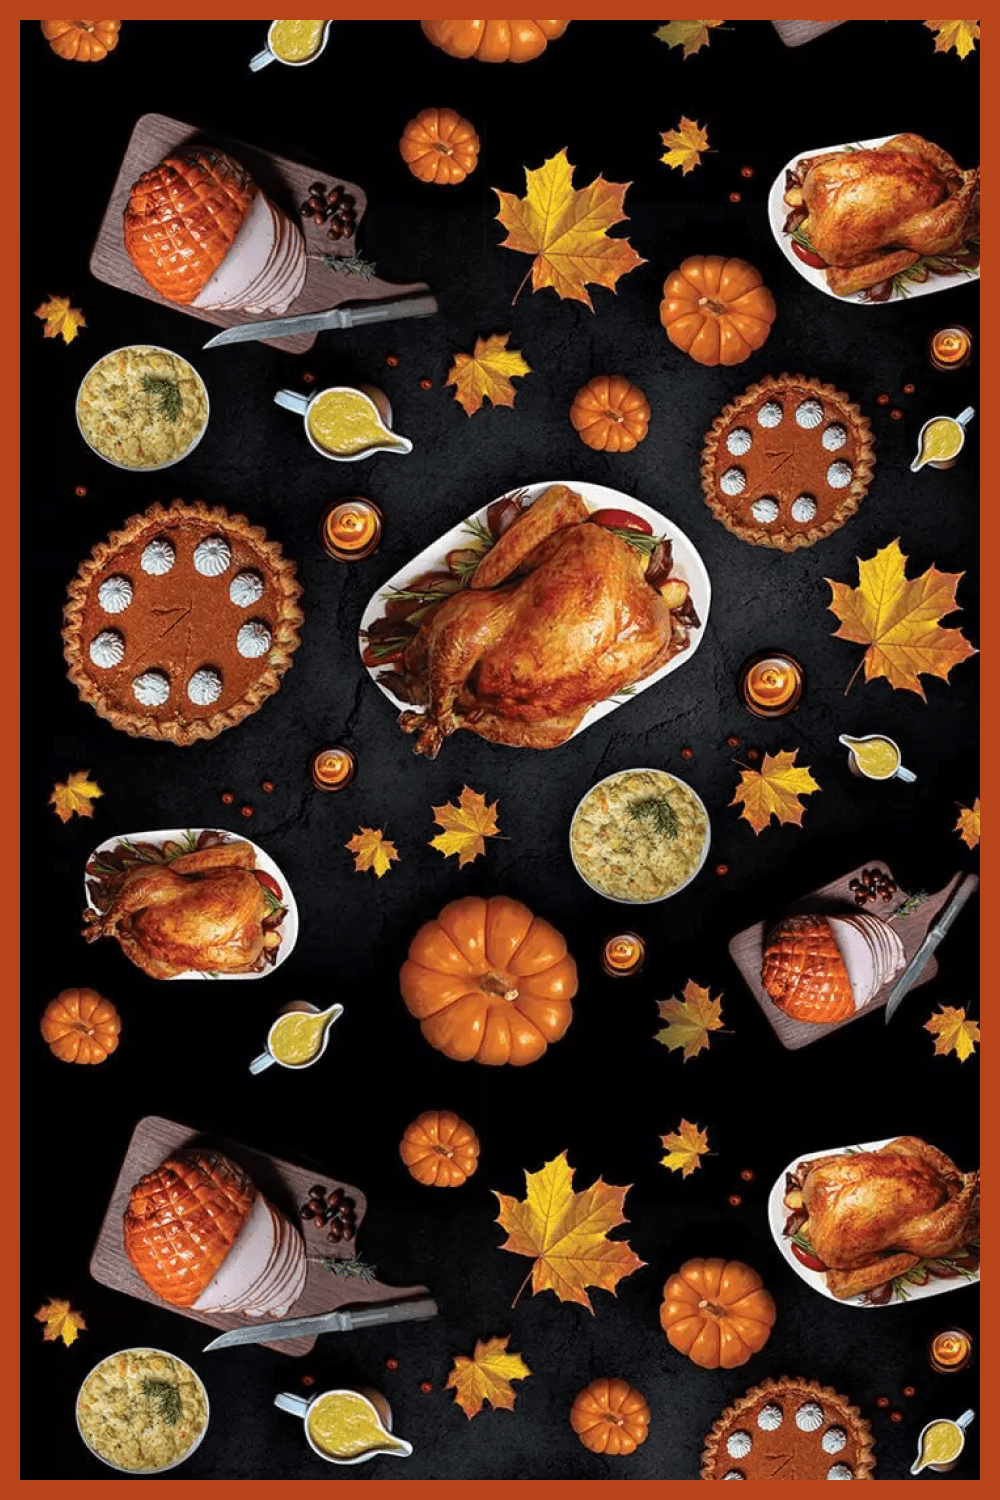 Turkey on a plate, pies, pumpkins, ham, leaves on a black background.